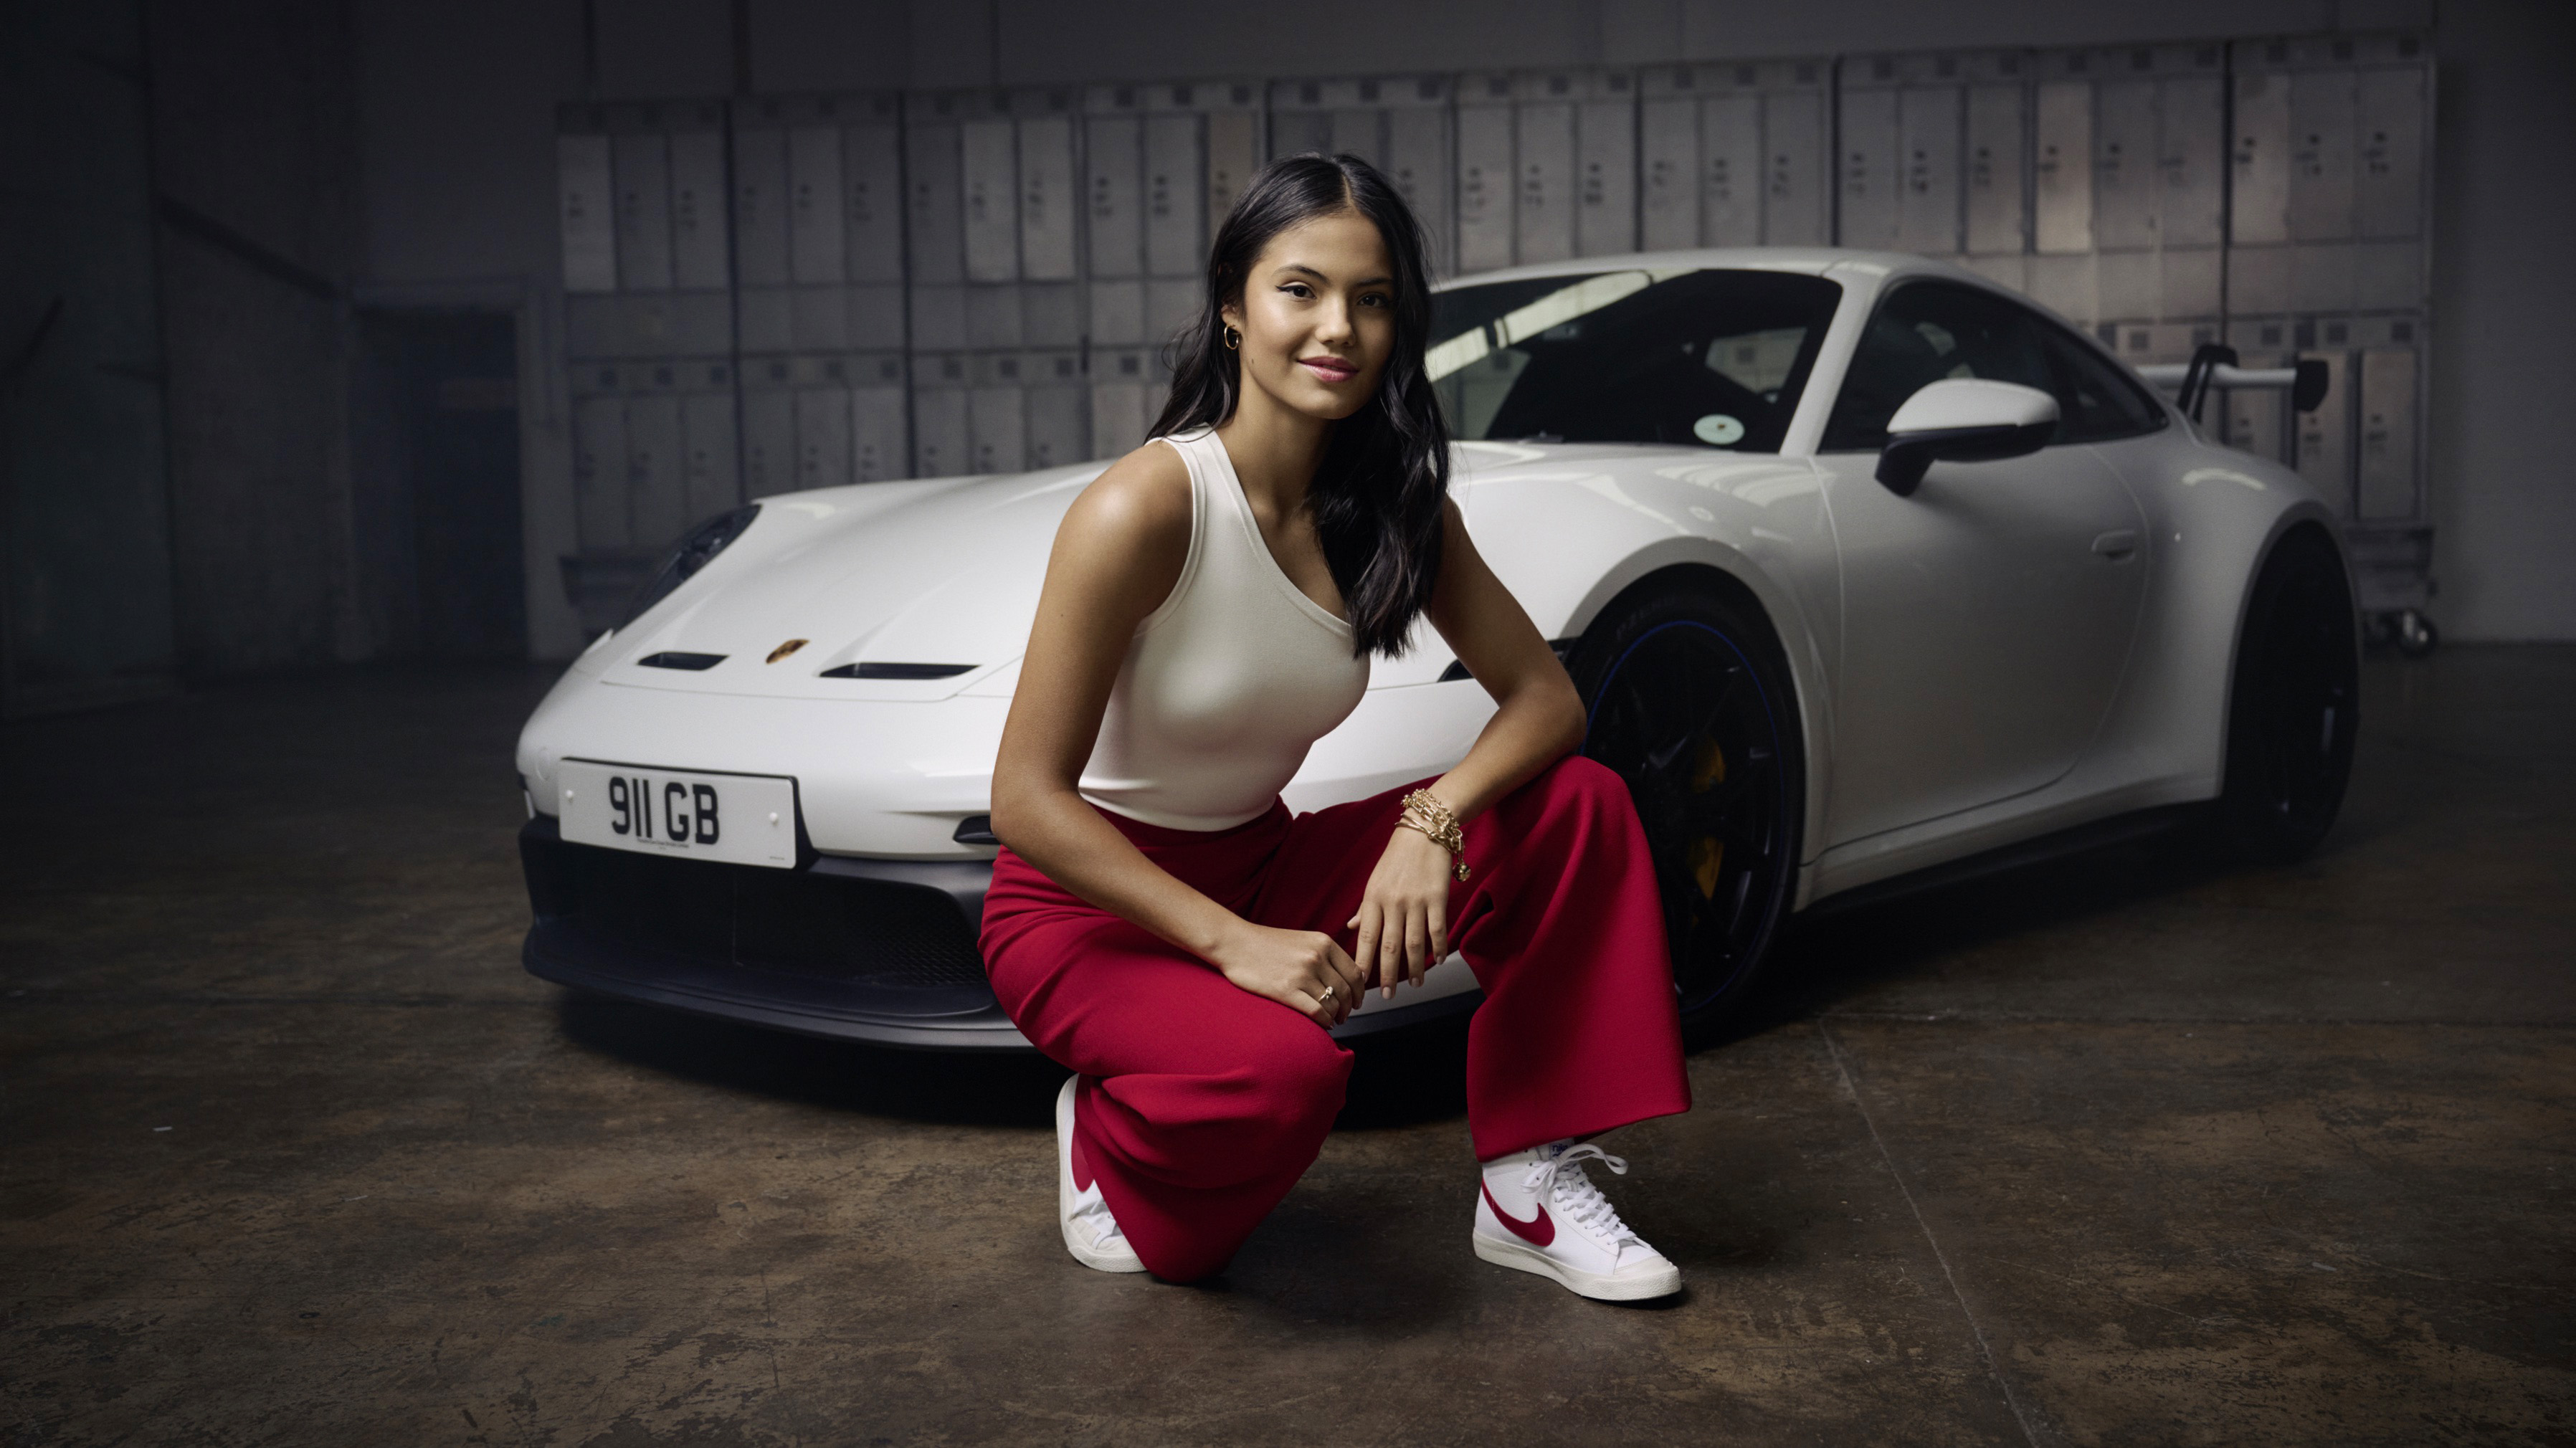 People 3593x2020 Emma Raducanu tennis British Porsche advertisements athletes women car women with cars celebrity